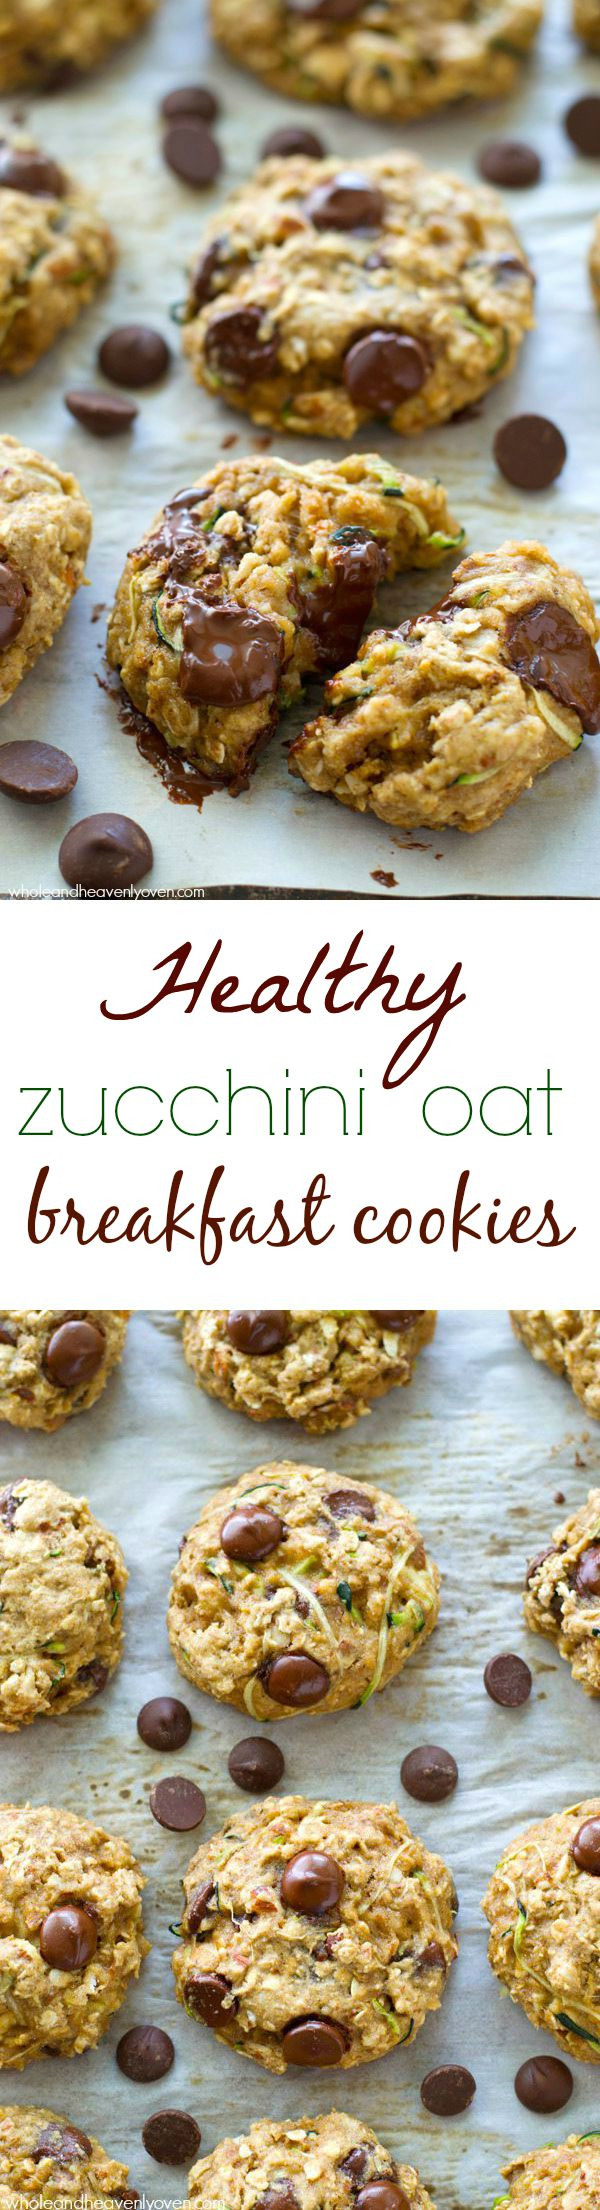 Zucchini Cookies Healthy
 Healthy Zucchini Oat Breakfast Cookies